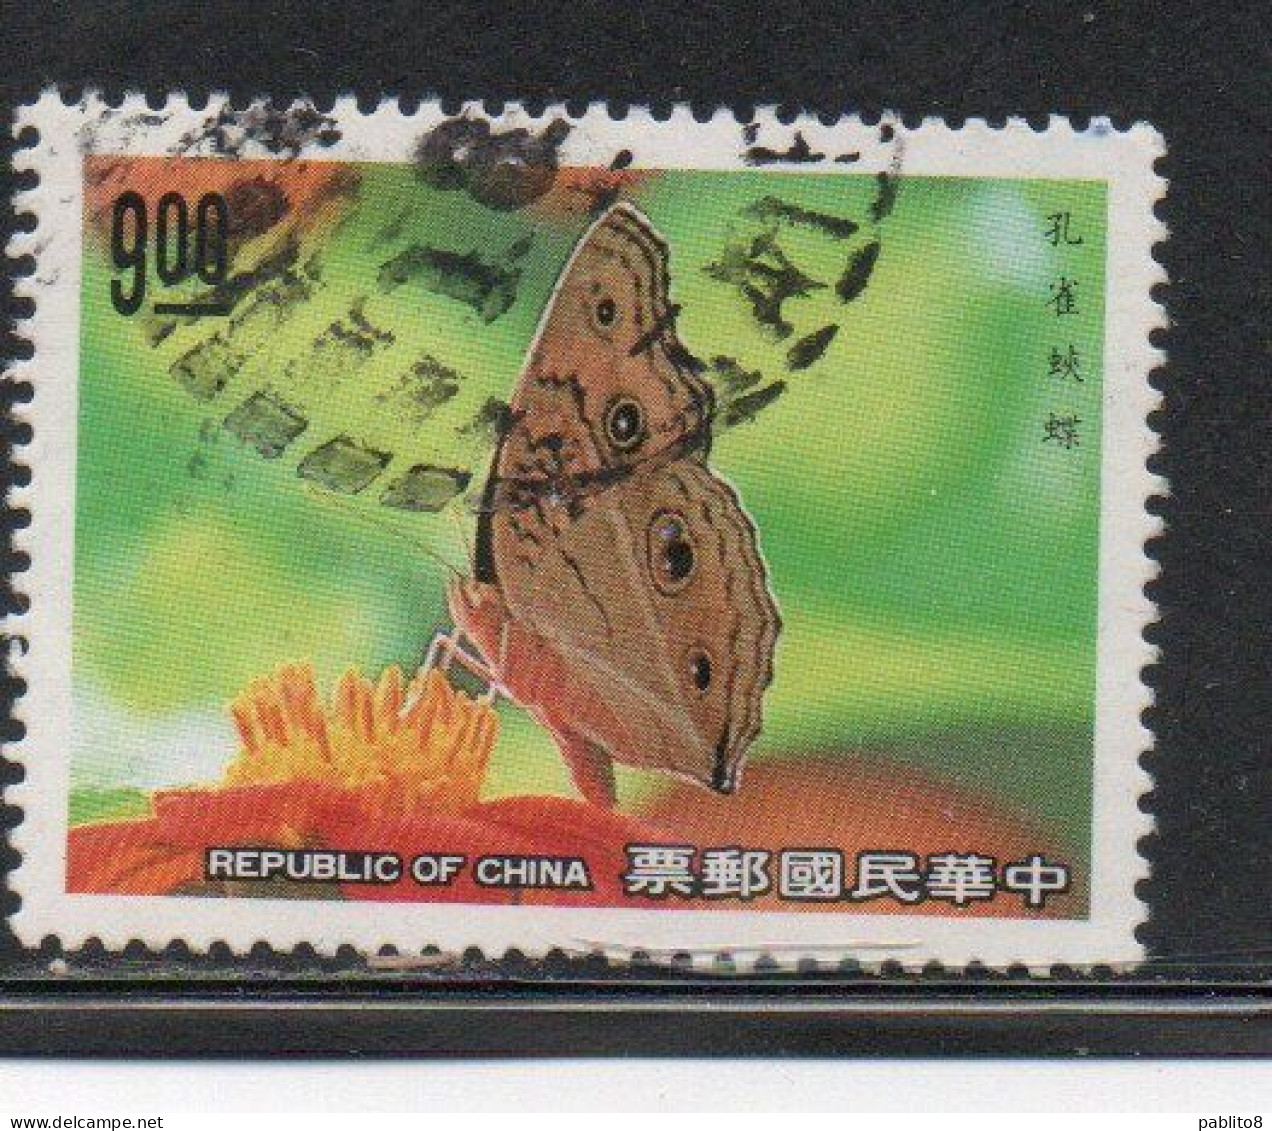 CHINA REPUBLIC CINA TAIWAN FORMOSA 1990 BUTTERFLIES PRECIS ALMANA 9$ USED USATO OBLITERE' - Oblitérés